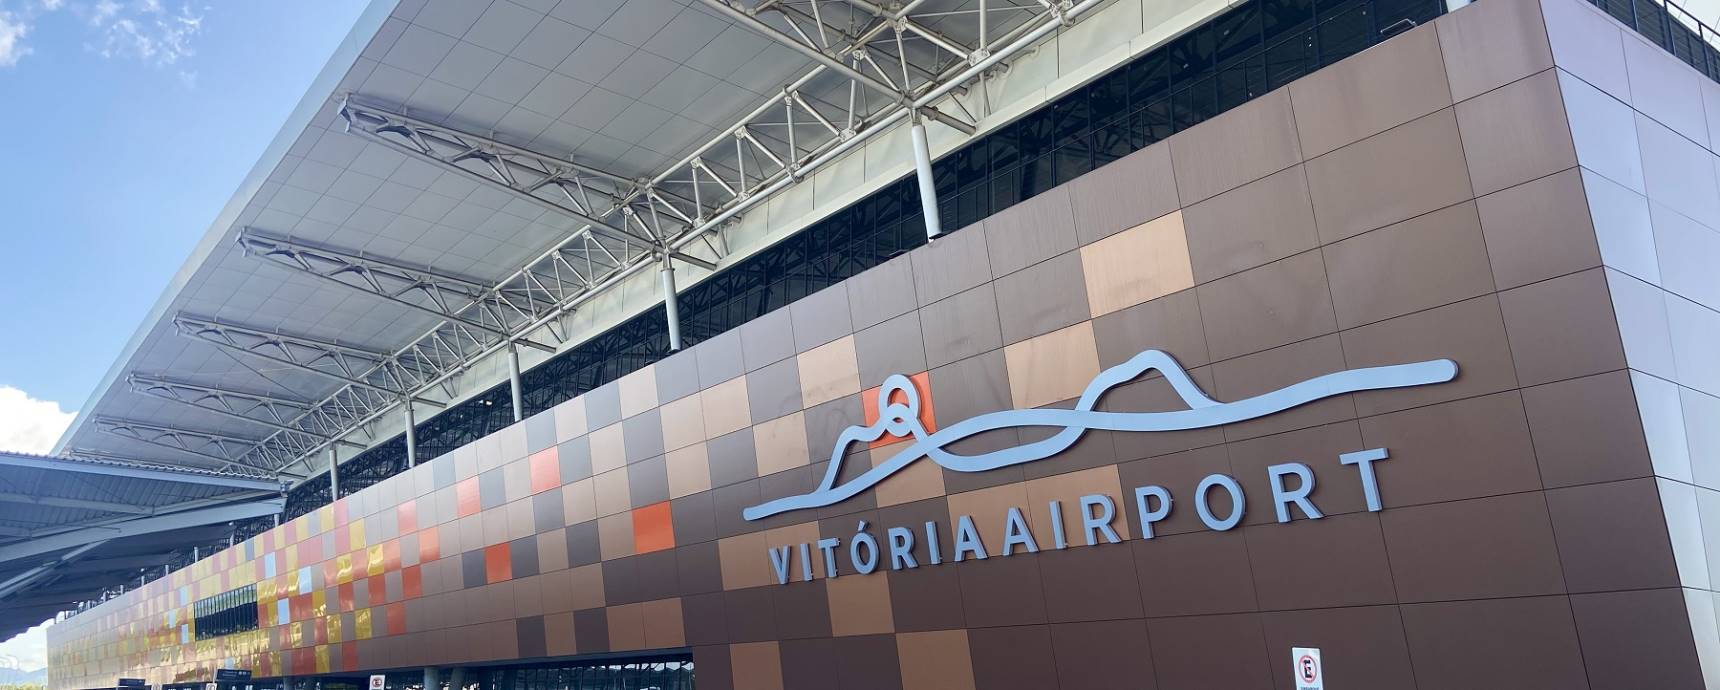 Vitória Airport launches new brand